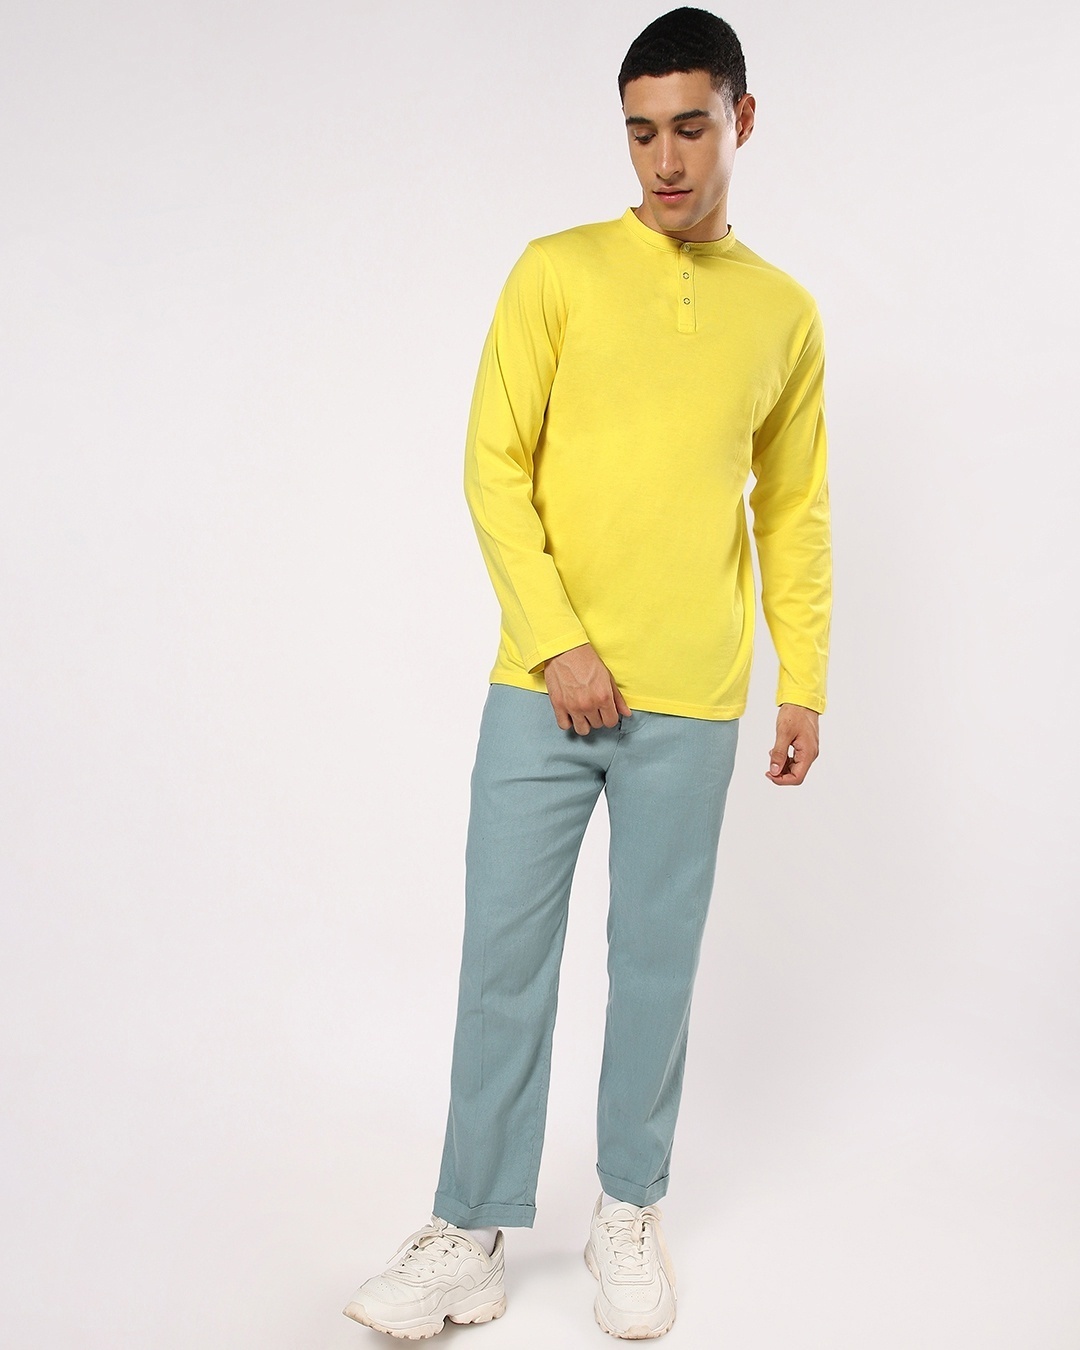 Shop Men's Yellow Plus Size Henley T-shirt